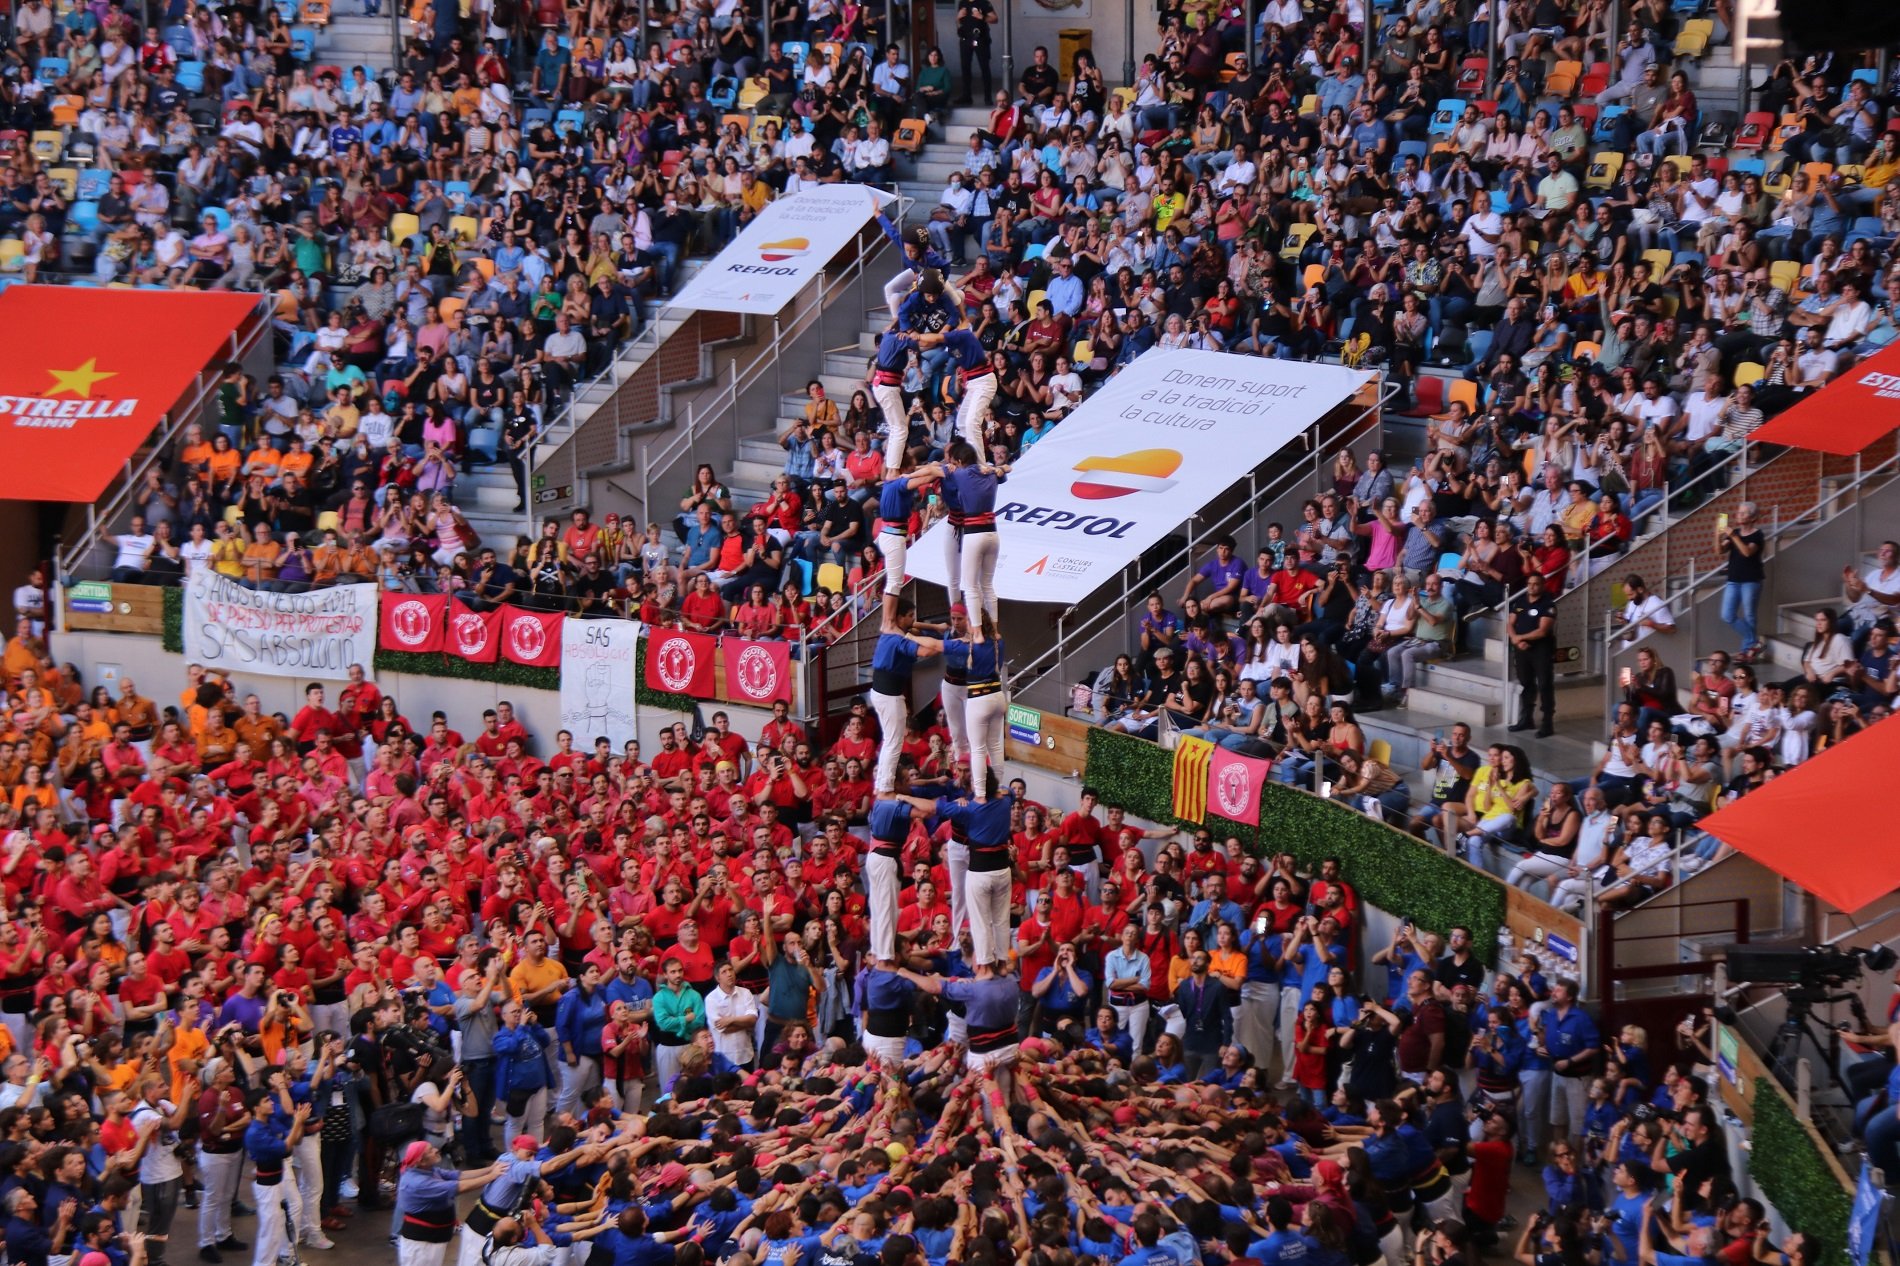 Los Castellers de la Vila de Gràcia ganan la segunda jornada del concurso de Castells en Tarragona